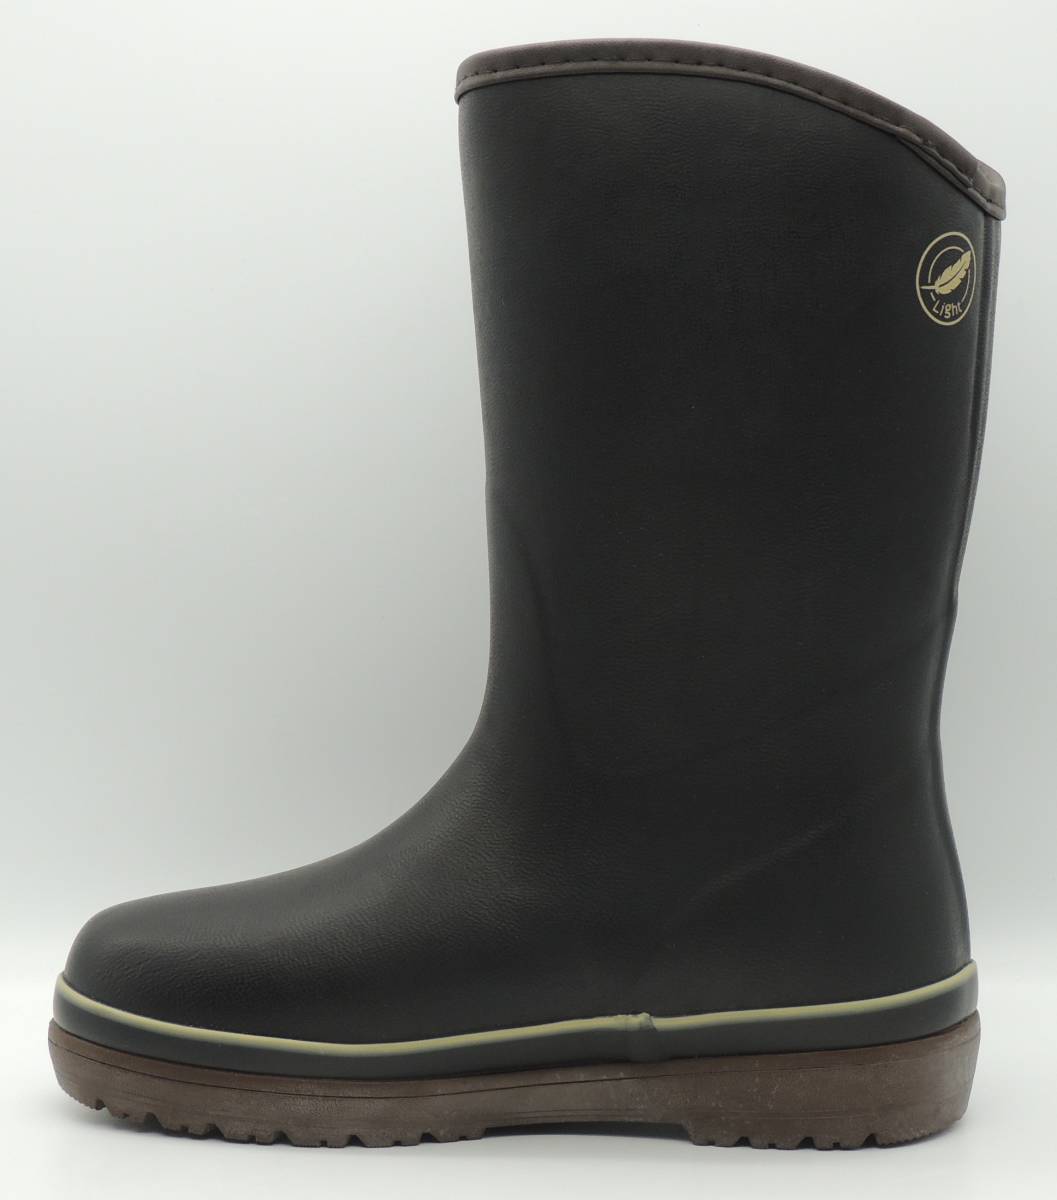  put on footwear ........ light weight protection against cold . slide woman lady's rain boots boots .. rubber sun slide L-814DW black L(24.0-24.5cm)